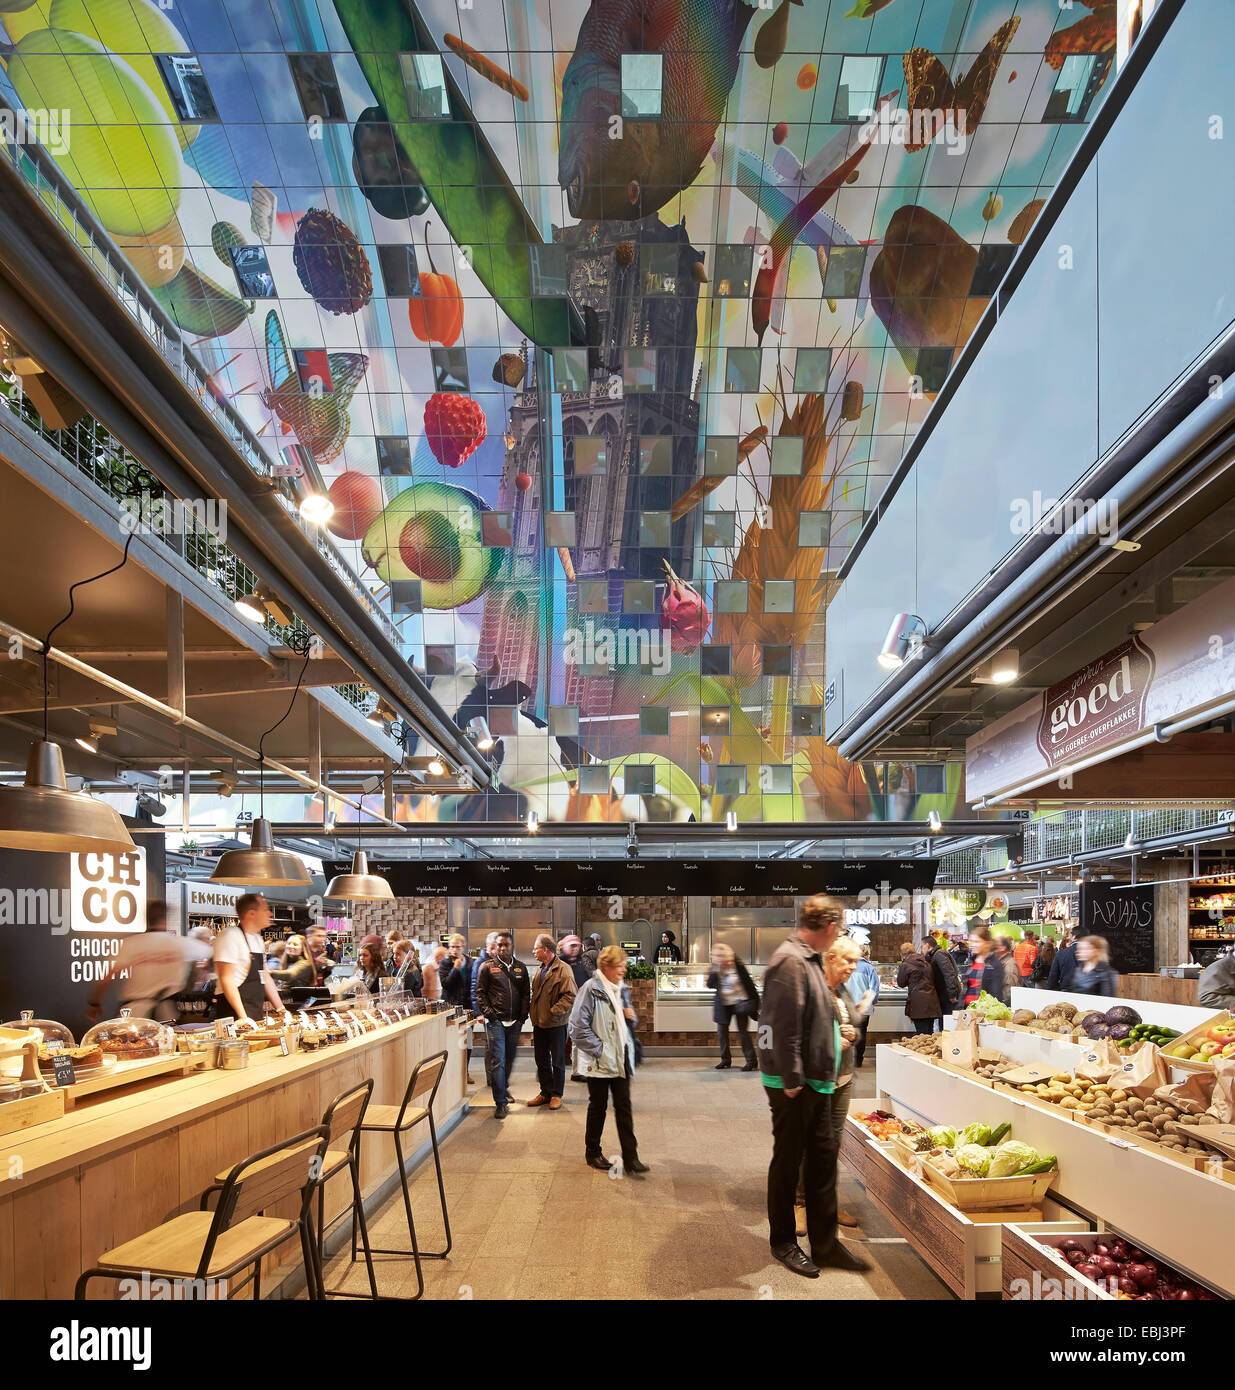 Market Hall Rotterdam, Rotterdam, Netherlands. Architect: MVRDV, 2014. Hall interior with food stalls. Stock Photo